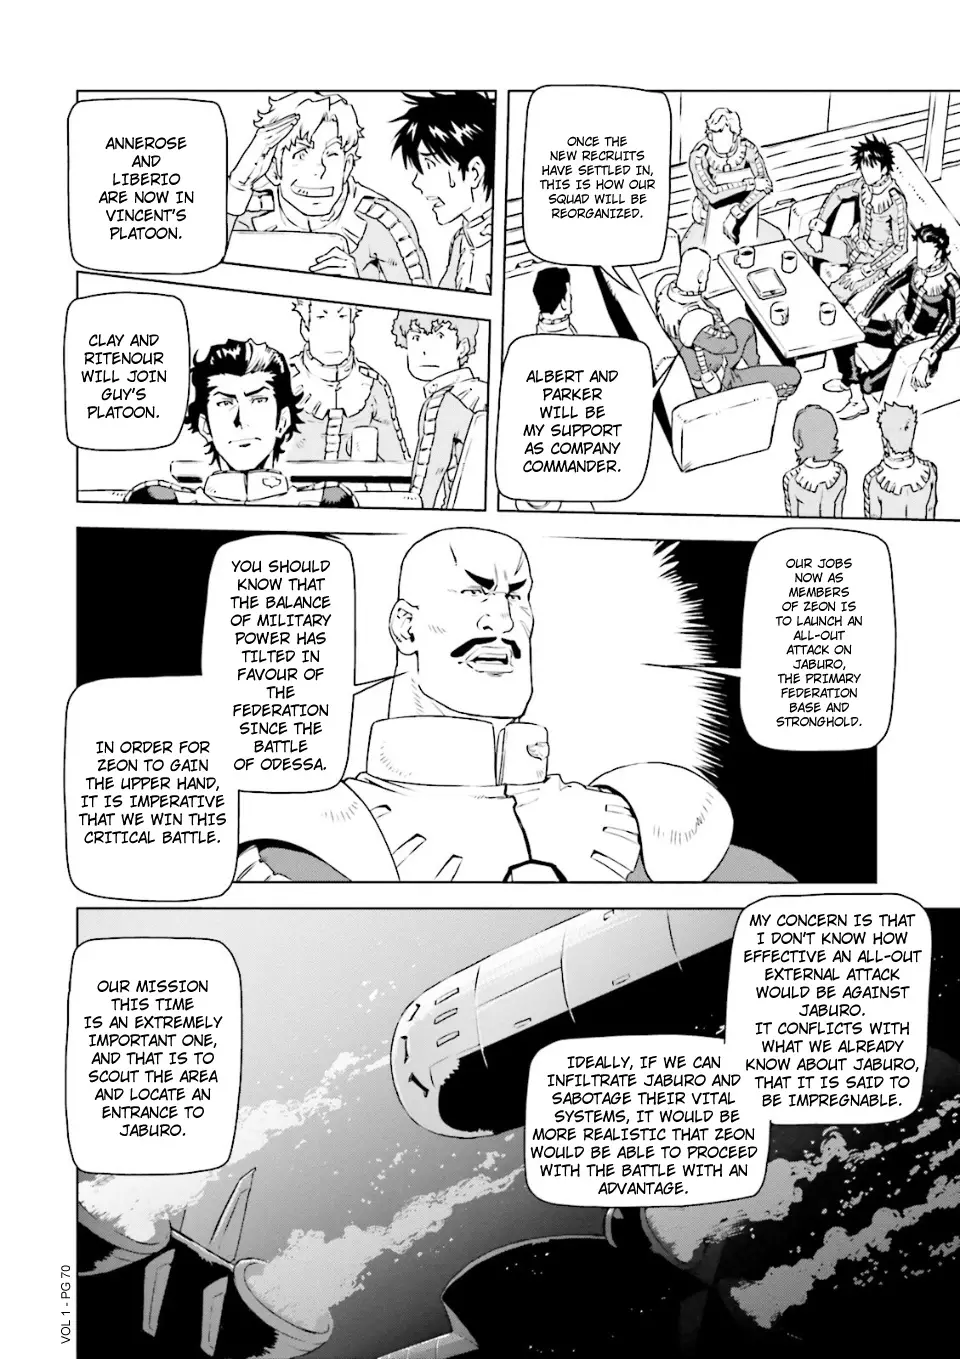 Mobile Suit Gundam Side Story - Missing Link - 3 page 4-57f5de00